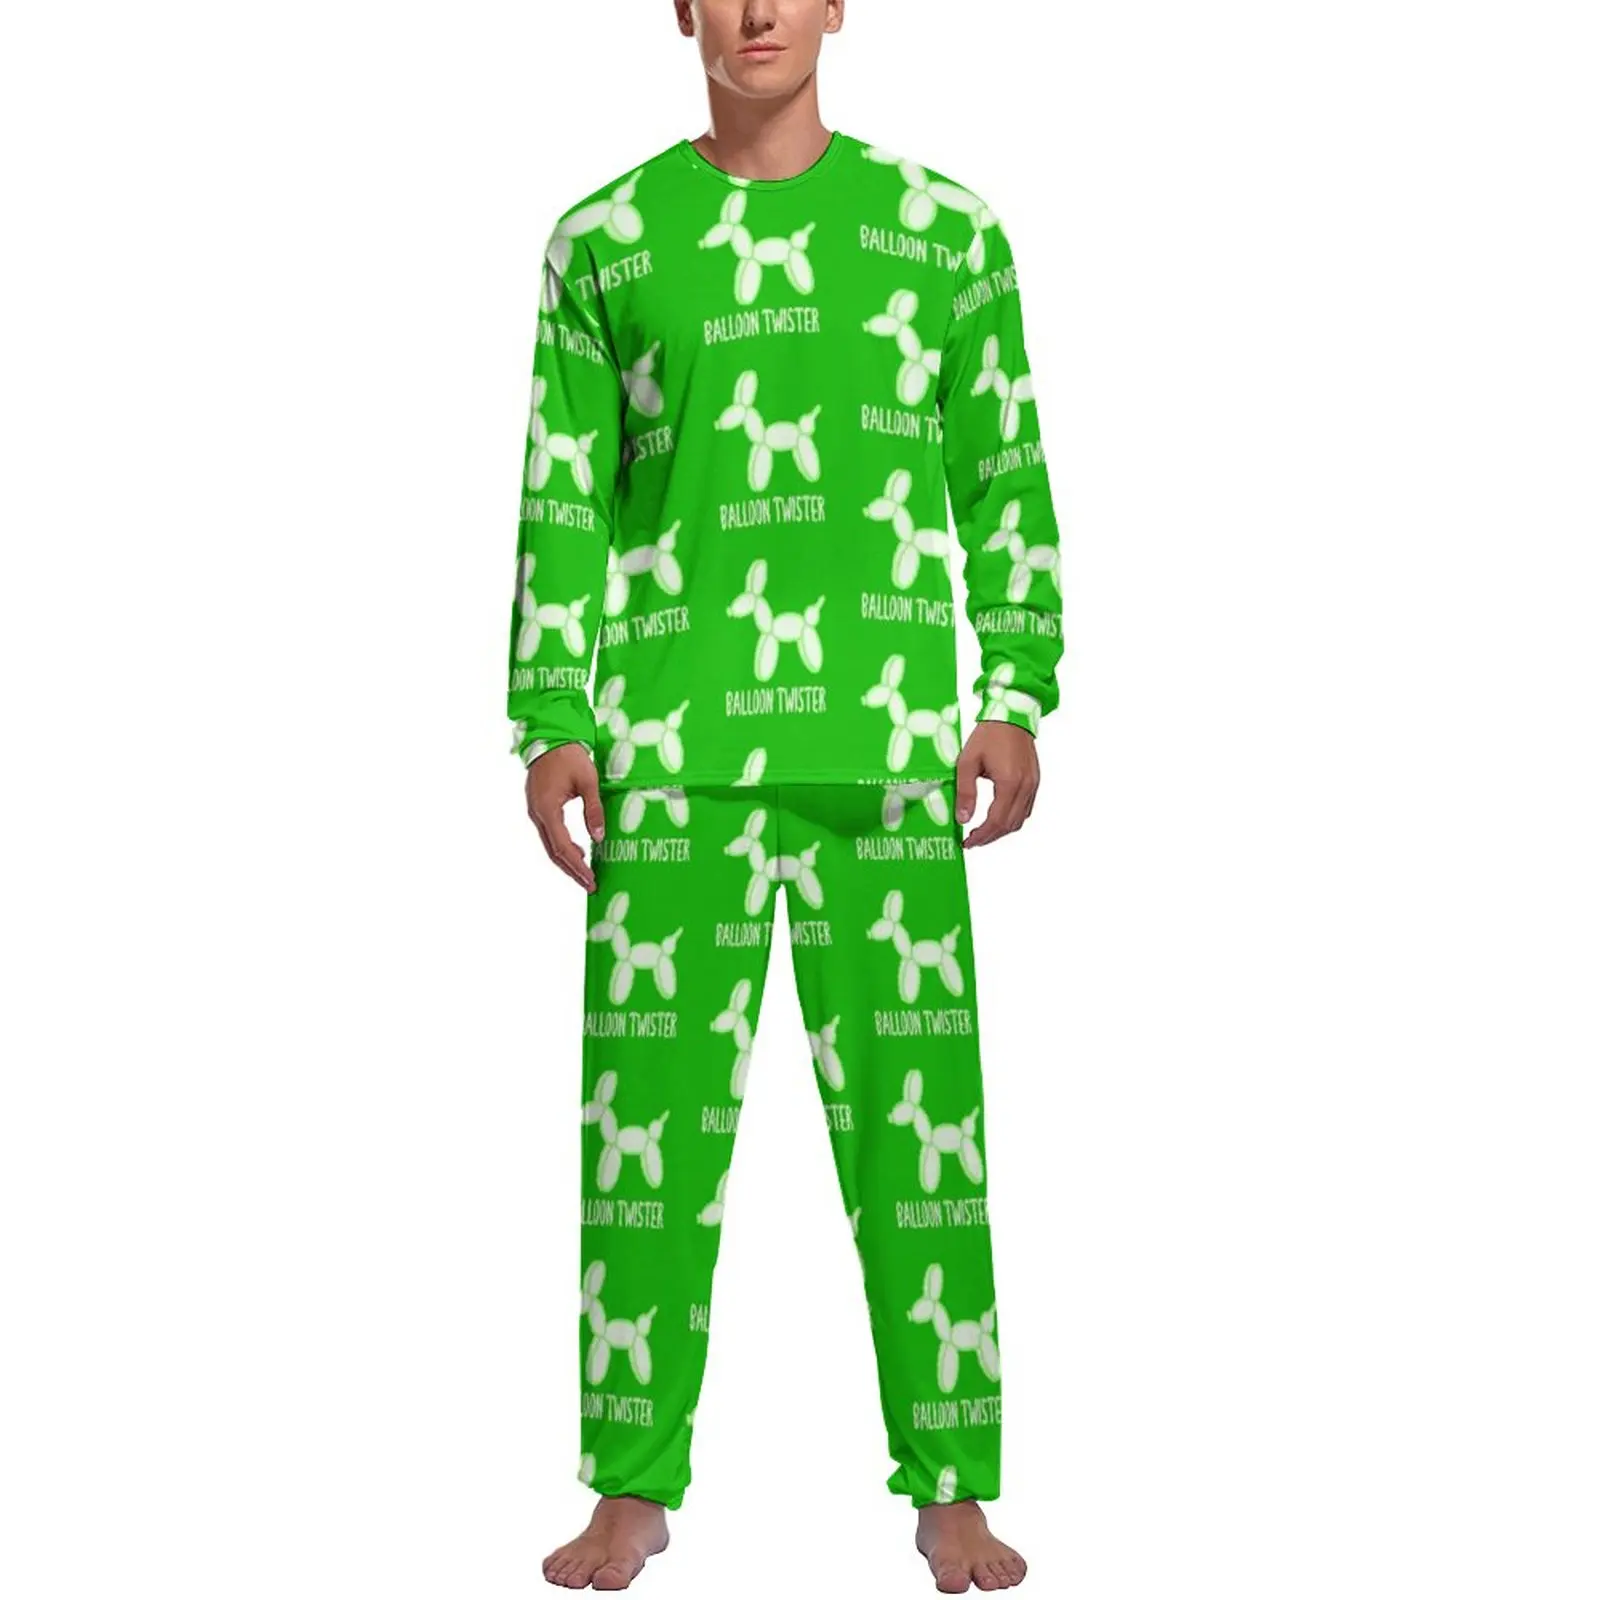 Balloon Twister Green Pajamas Cute Dogs Print Men Long Sleeves Cool Pajama Sets 2 Piece Casual Daily Graphic Sleepwear Gift Idea